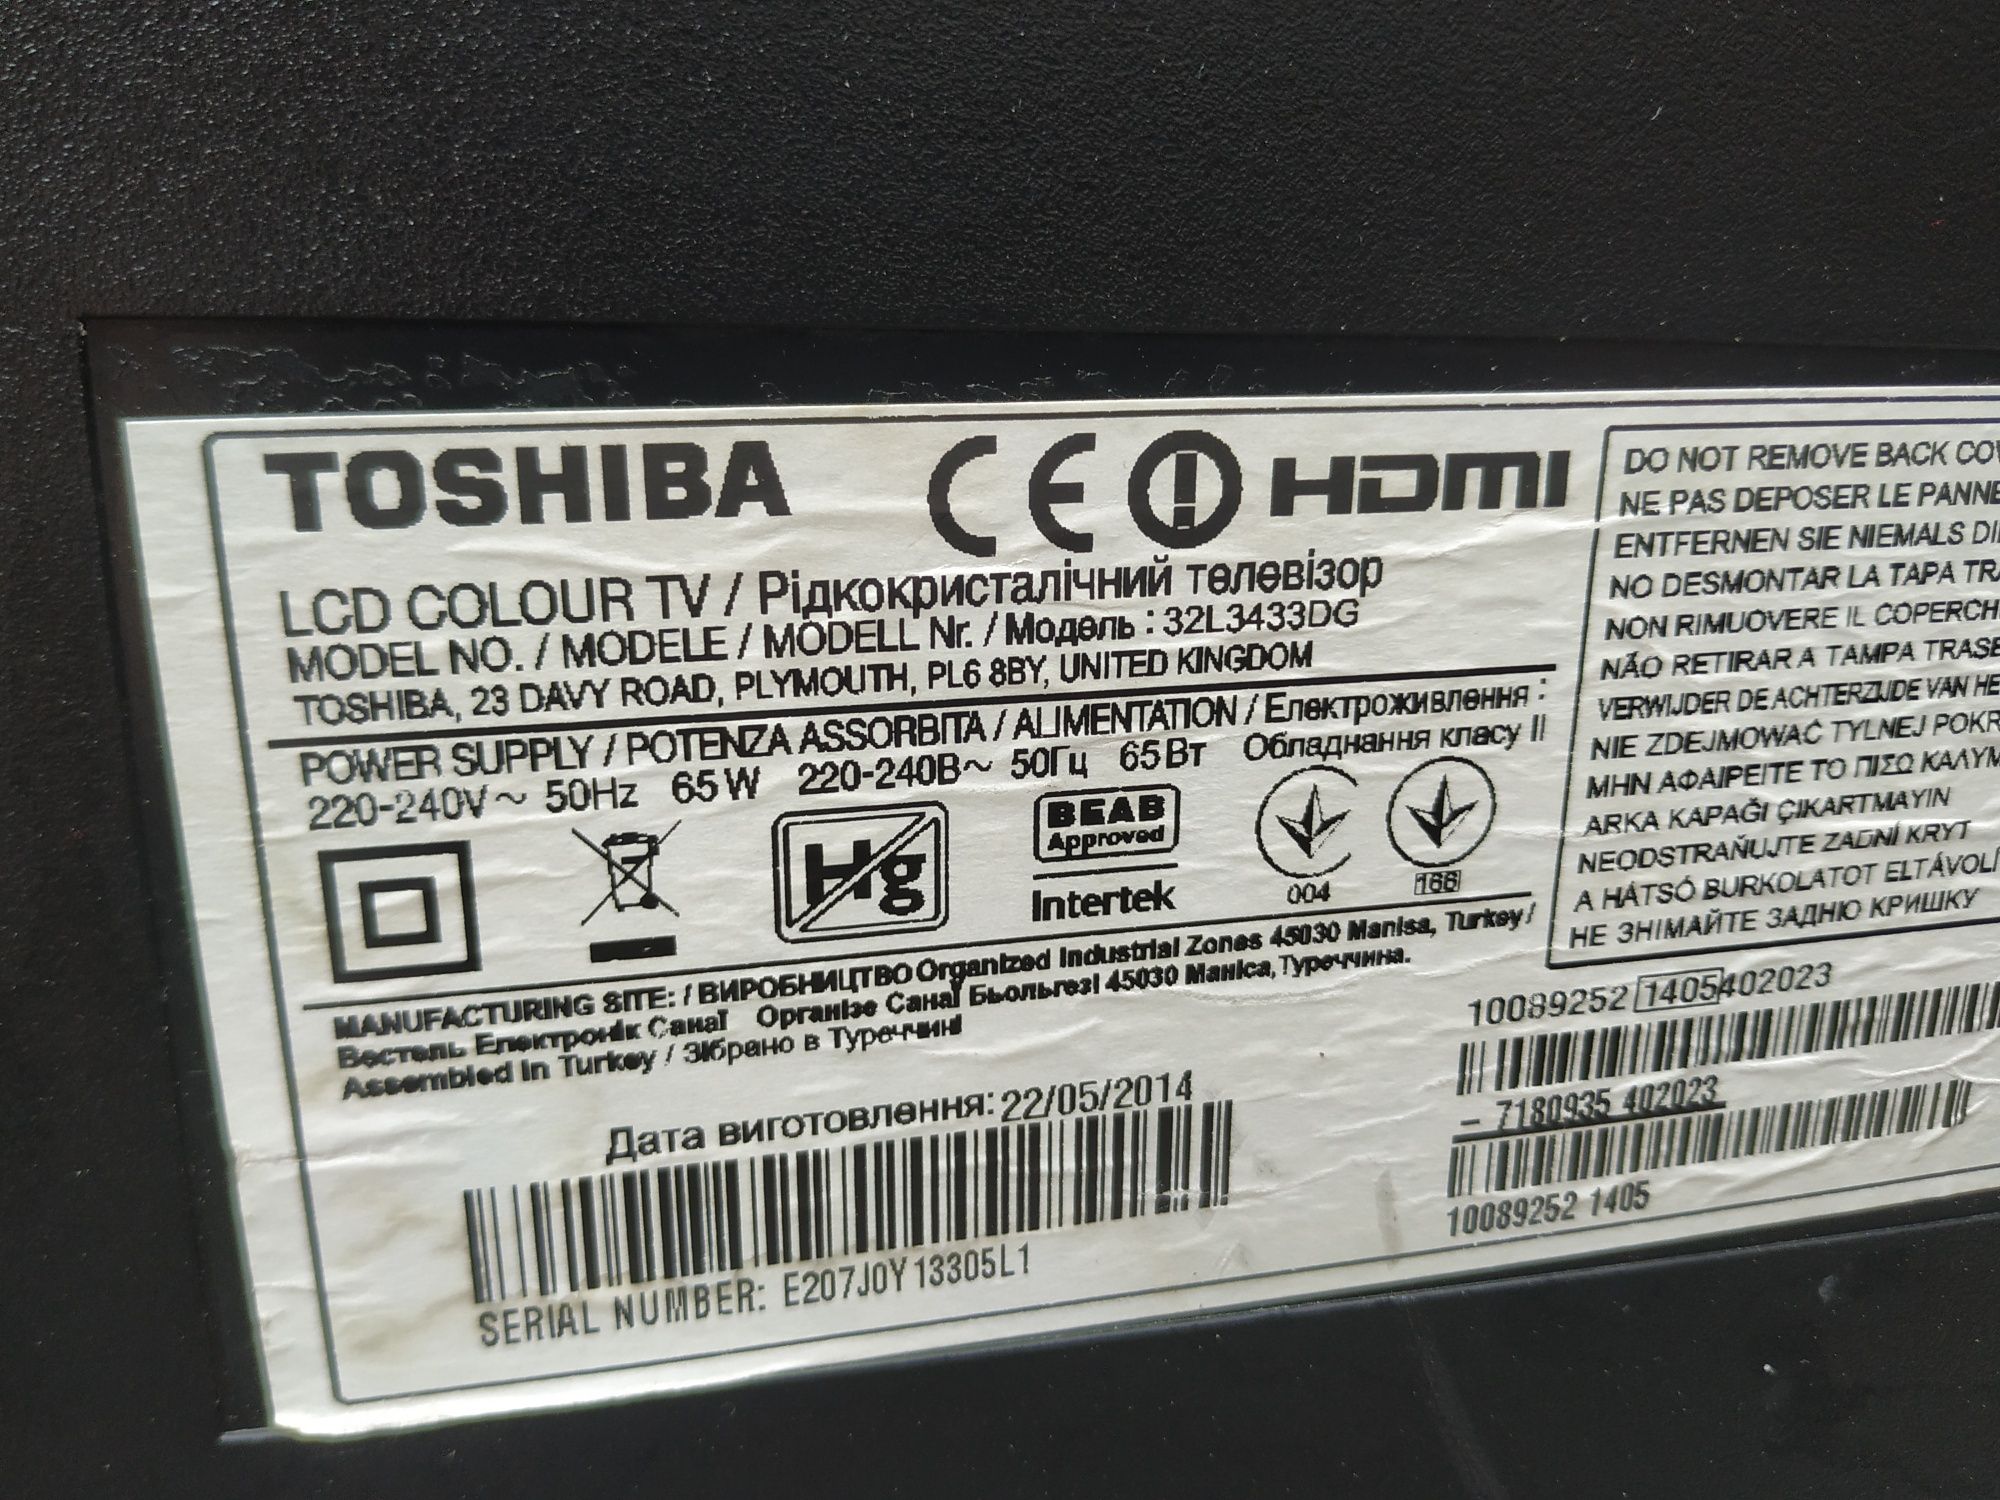 Toshiba 32L3433DG Telewizor